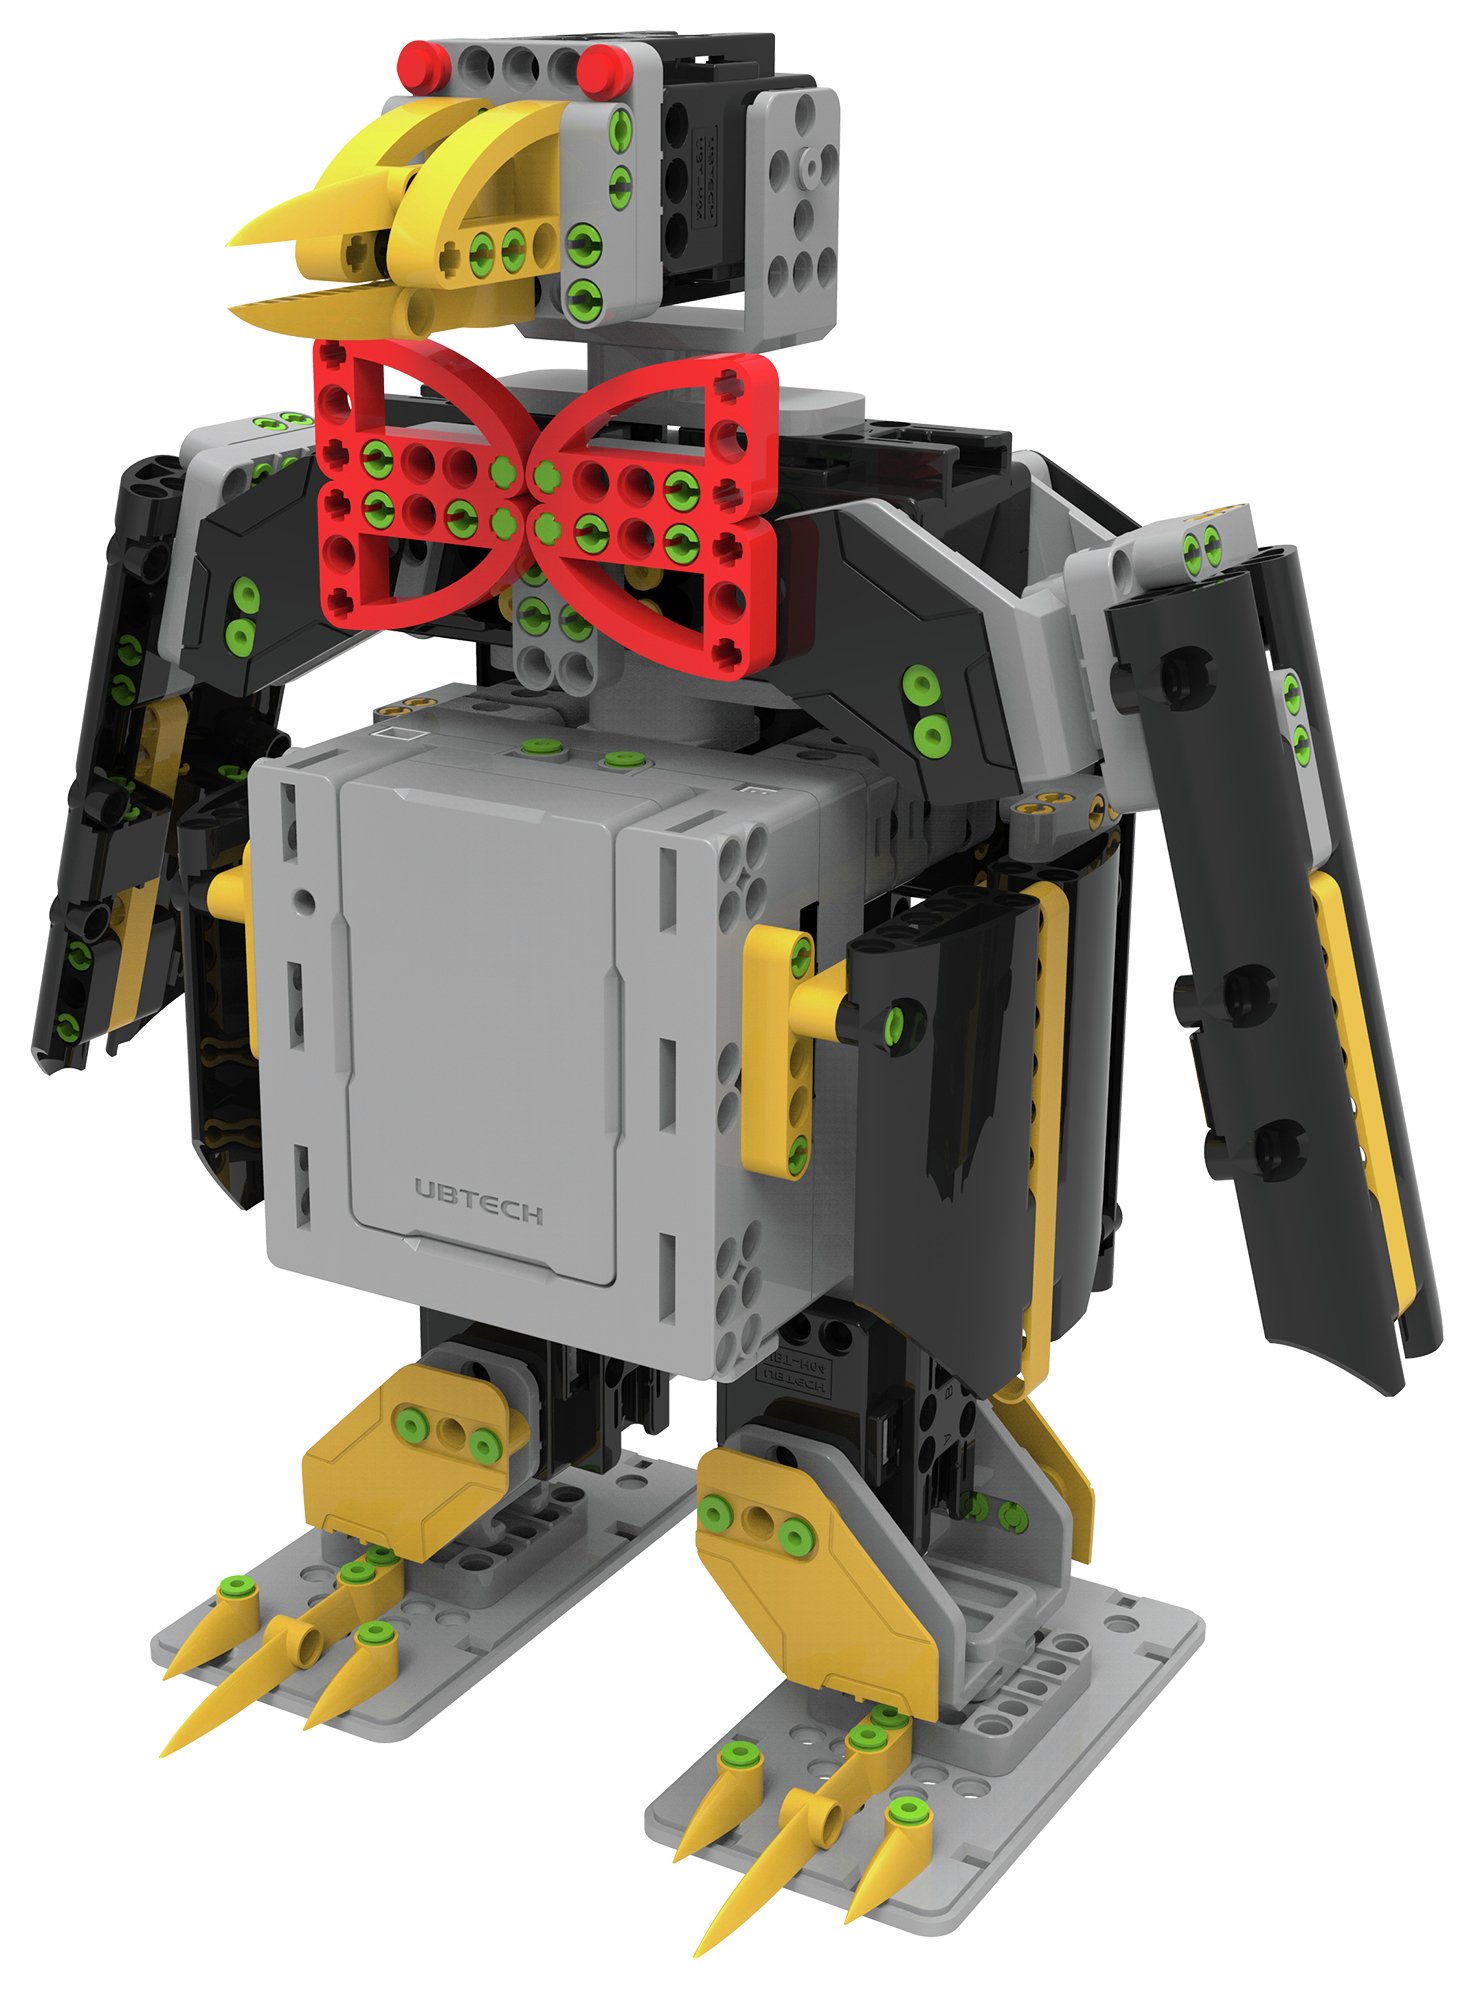 Ub Tech Jimu Explorer Toy Robot